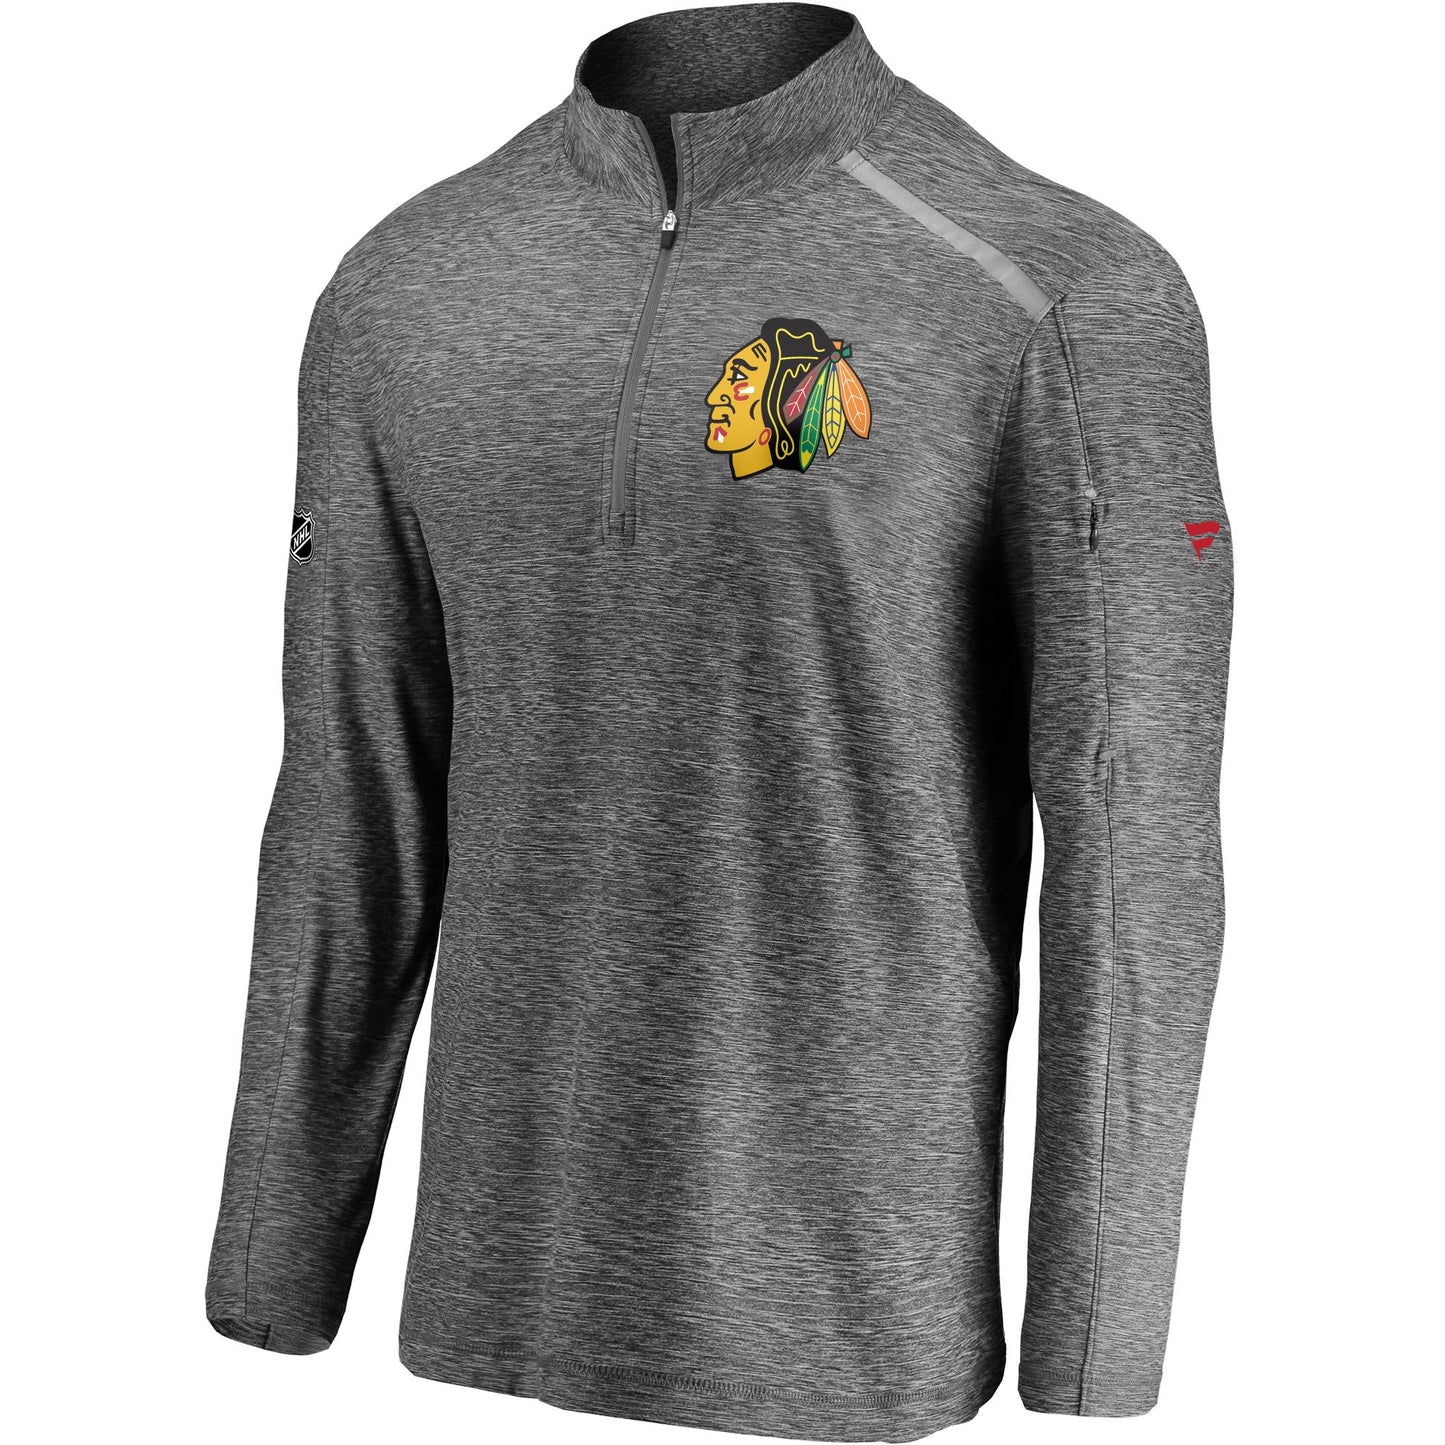 Men's Chicago Blackhawks Fanatics Branded Heathered Gray Authentic Pro Clutch Quarter-Zip Pullover Jacket